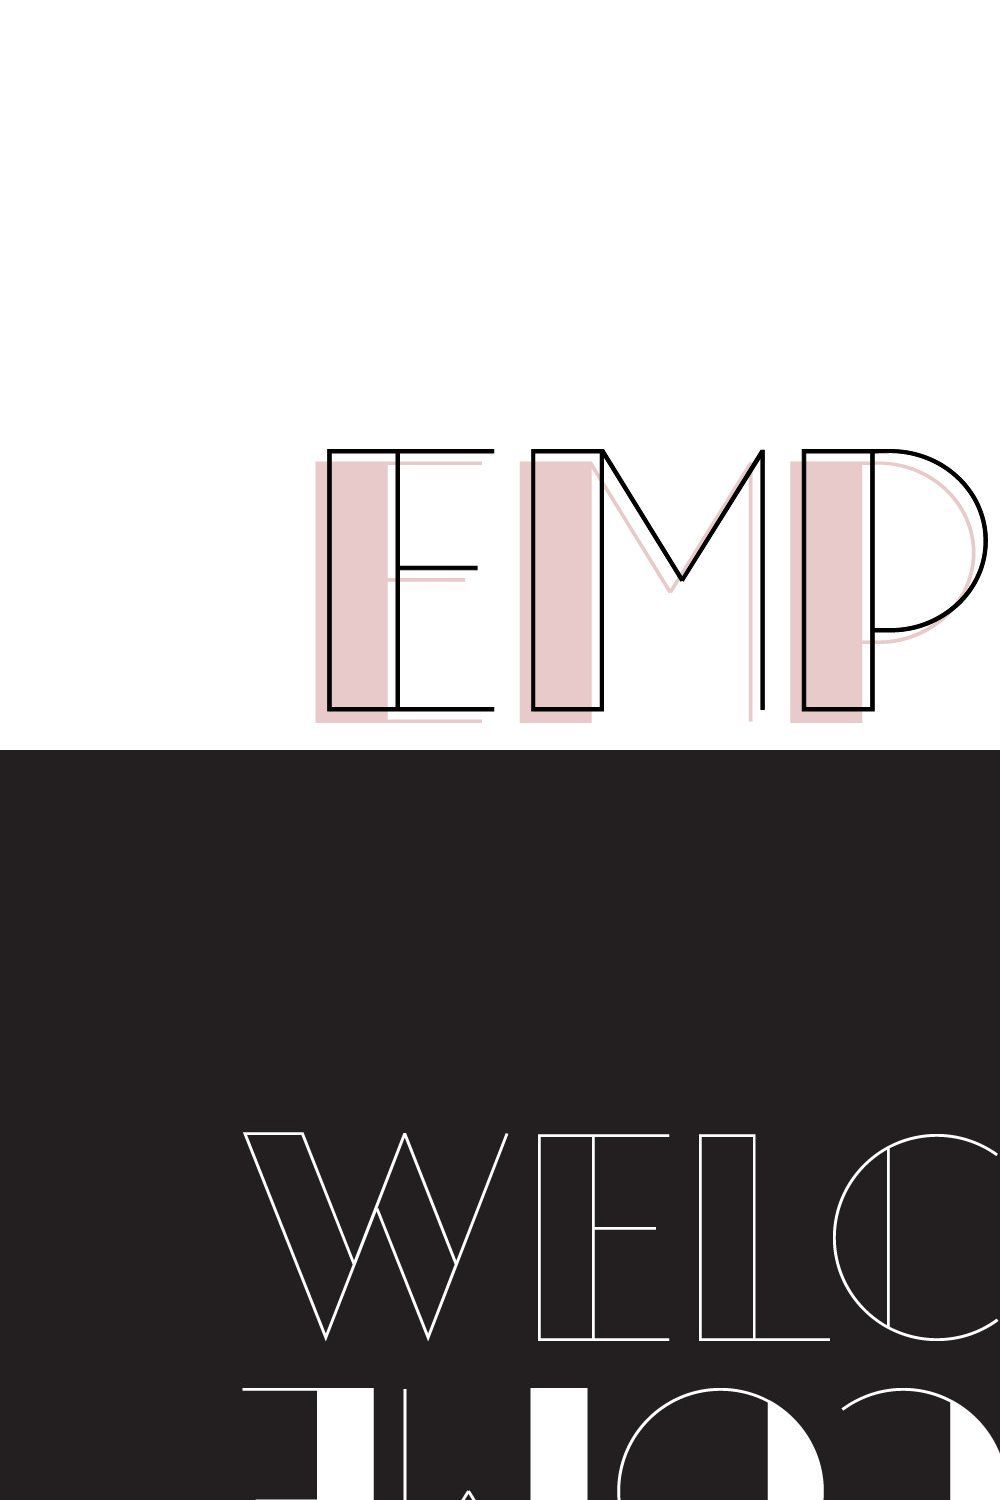 Empire | An Art Deco Font Duo pinterest preview image.